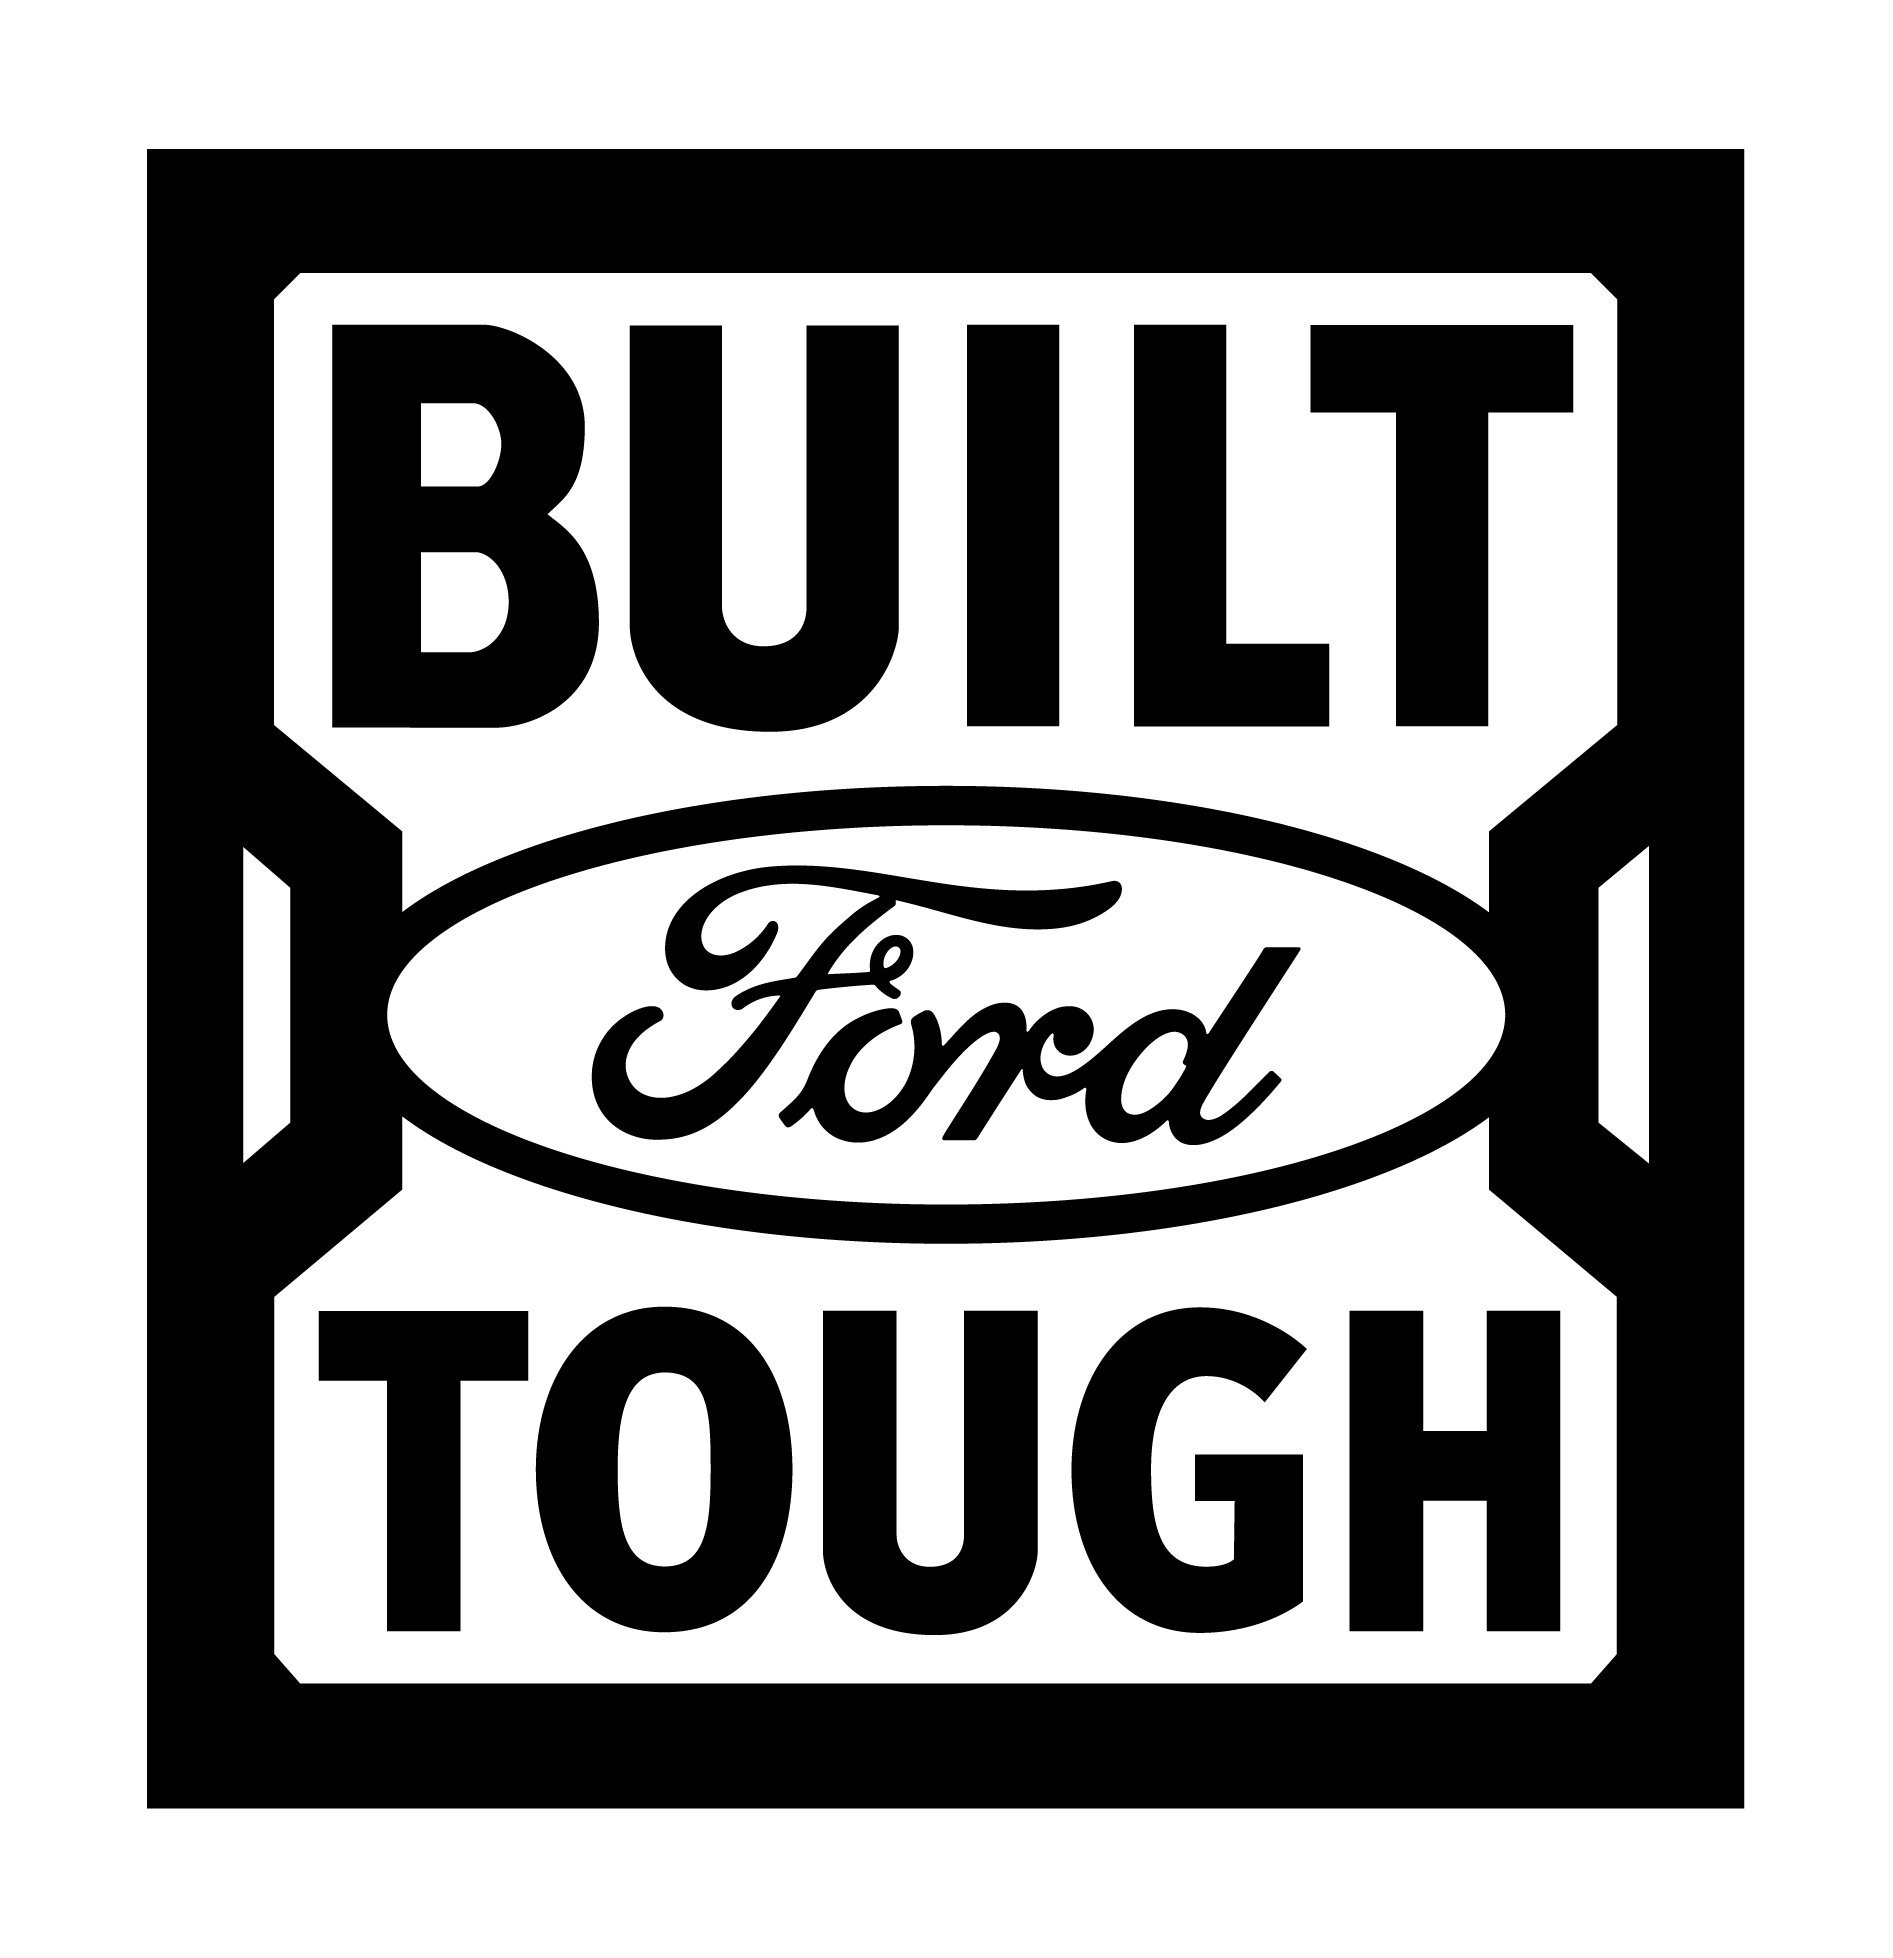 Future Ford Logo - Home of the Future